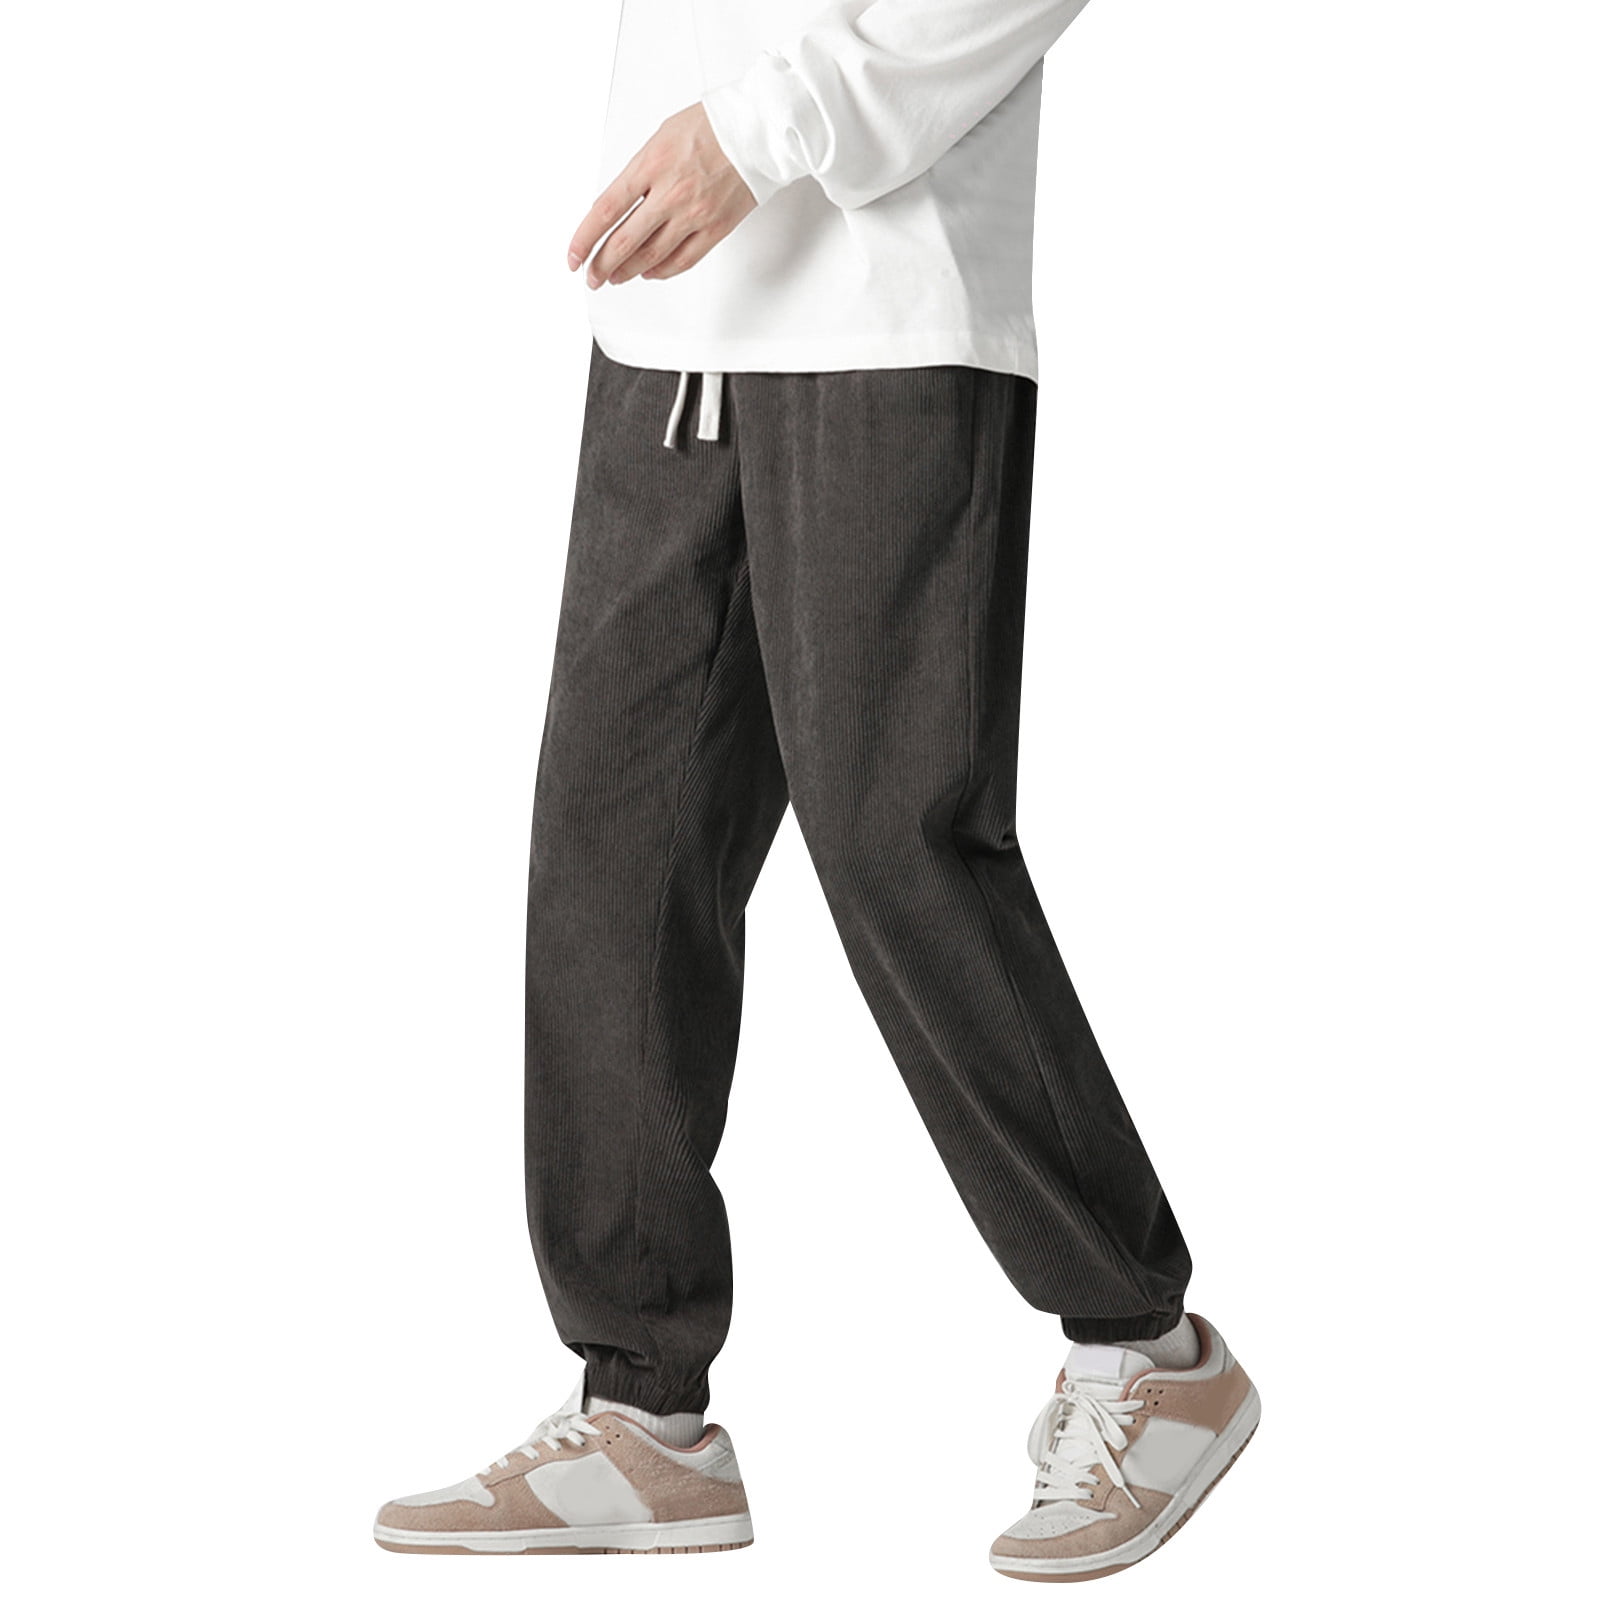 spring summer new casual pants men| Alibaba.com